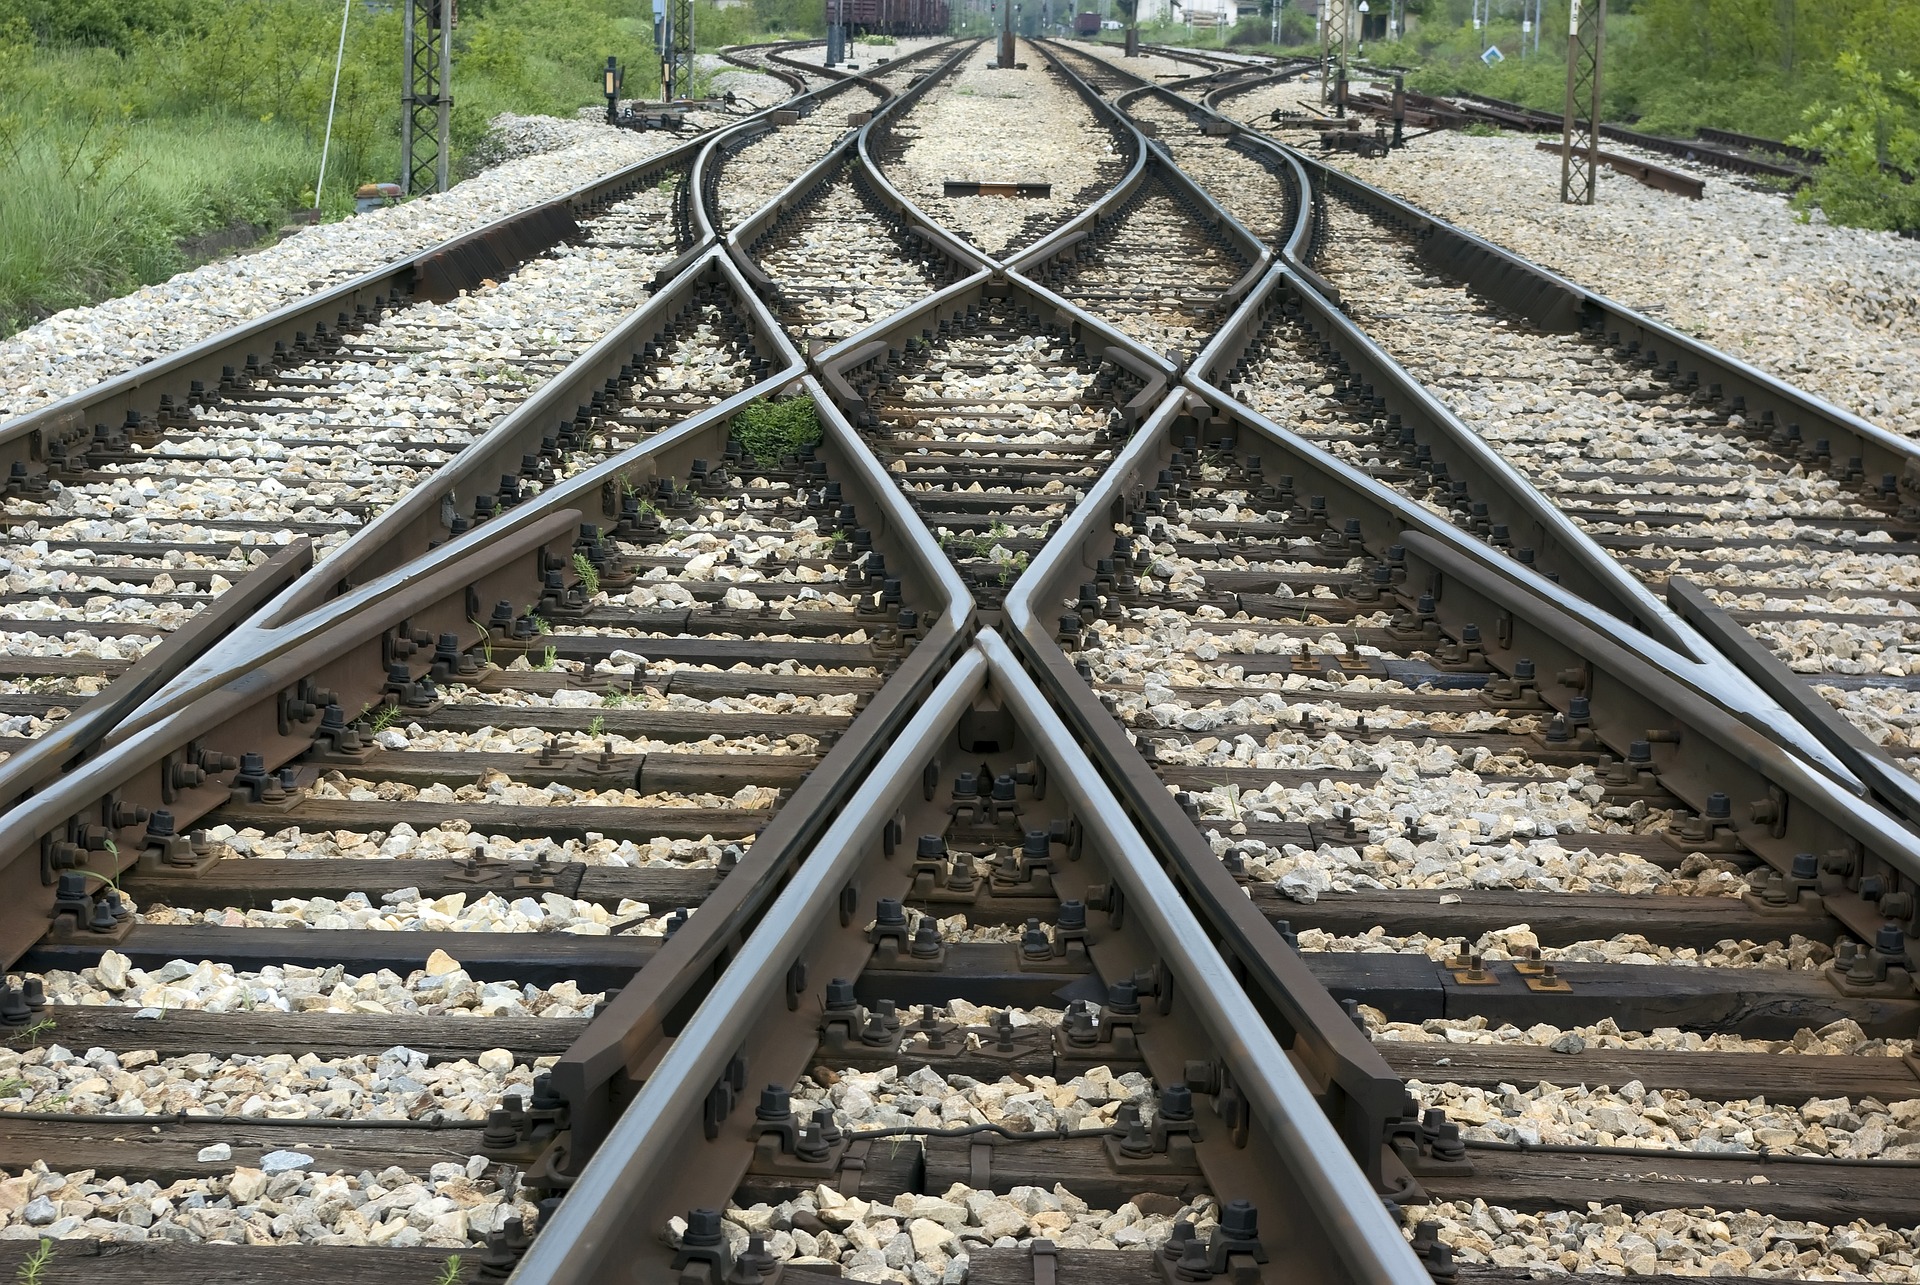 Railroad tracks crossing multiple times